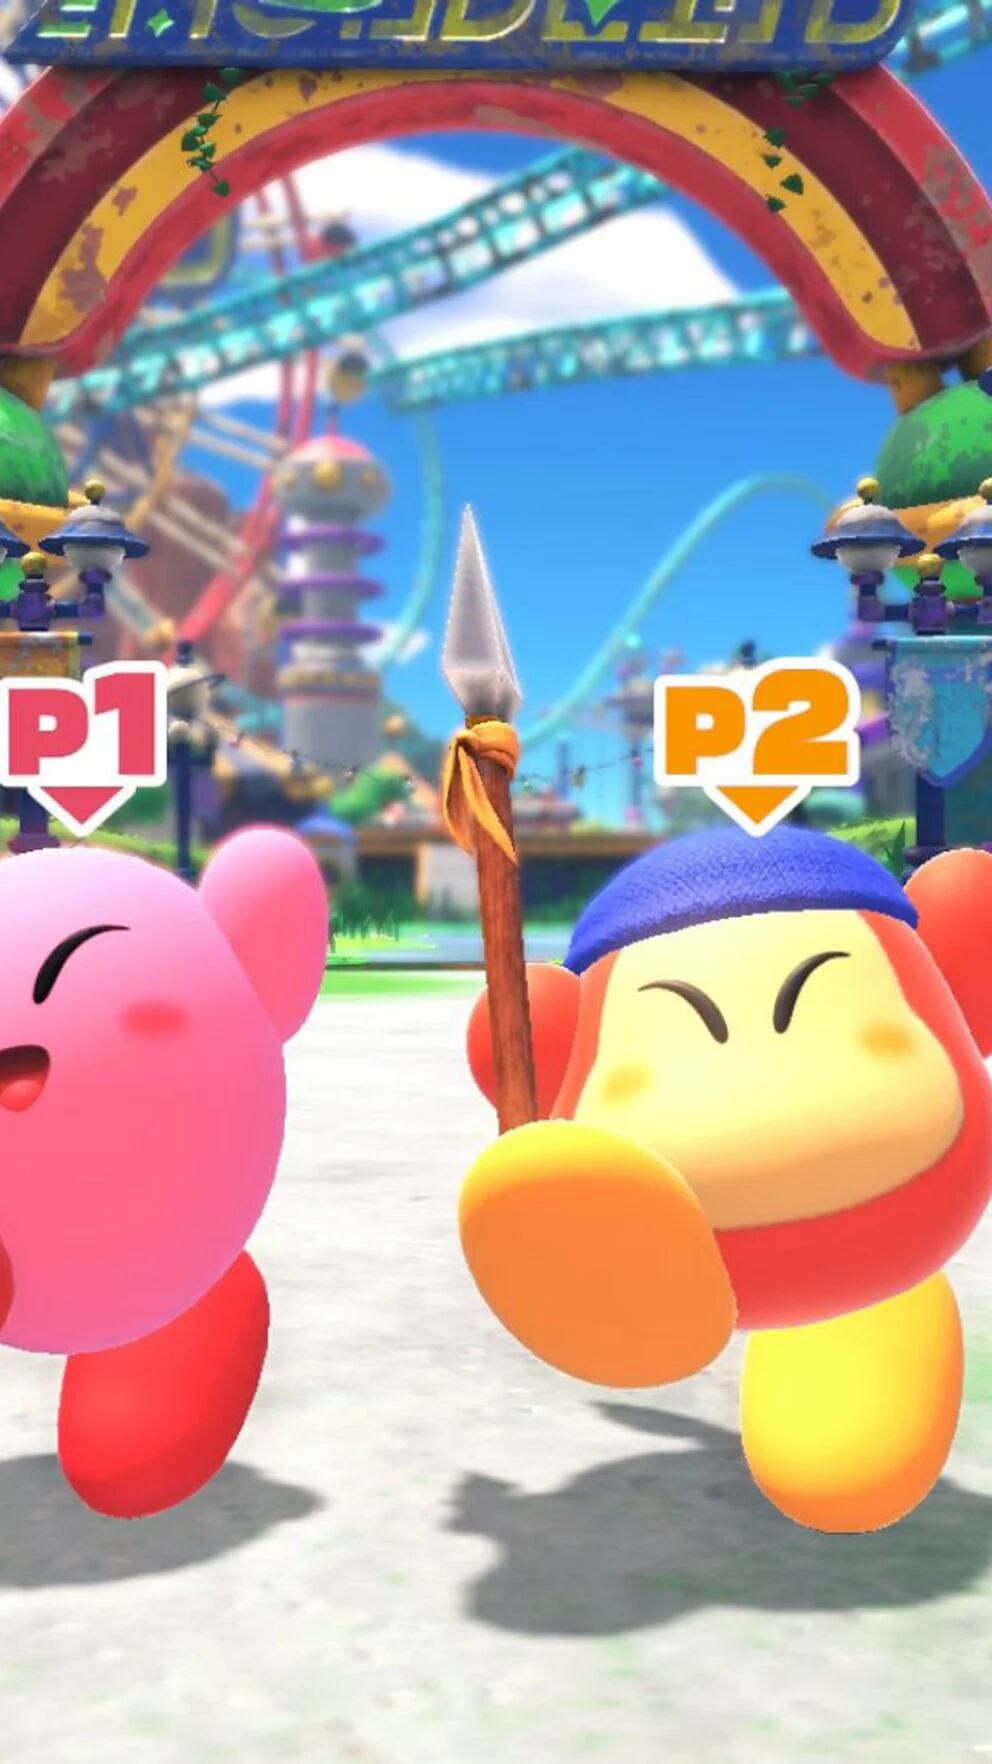 Kirby y la tierra olvidada - Nintendo Switch [ Peru